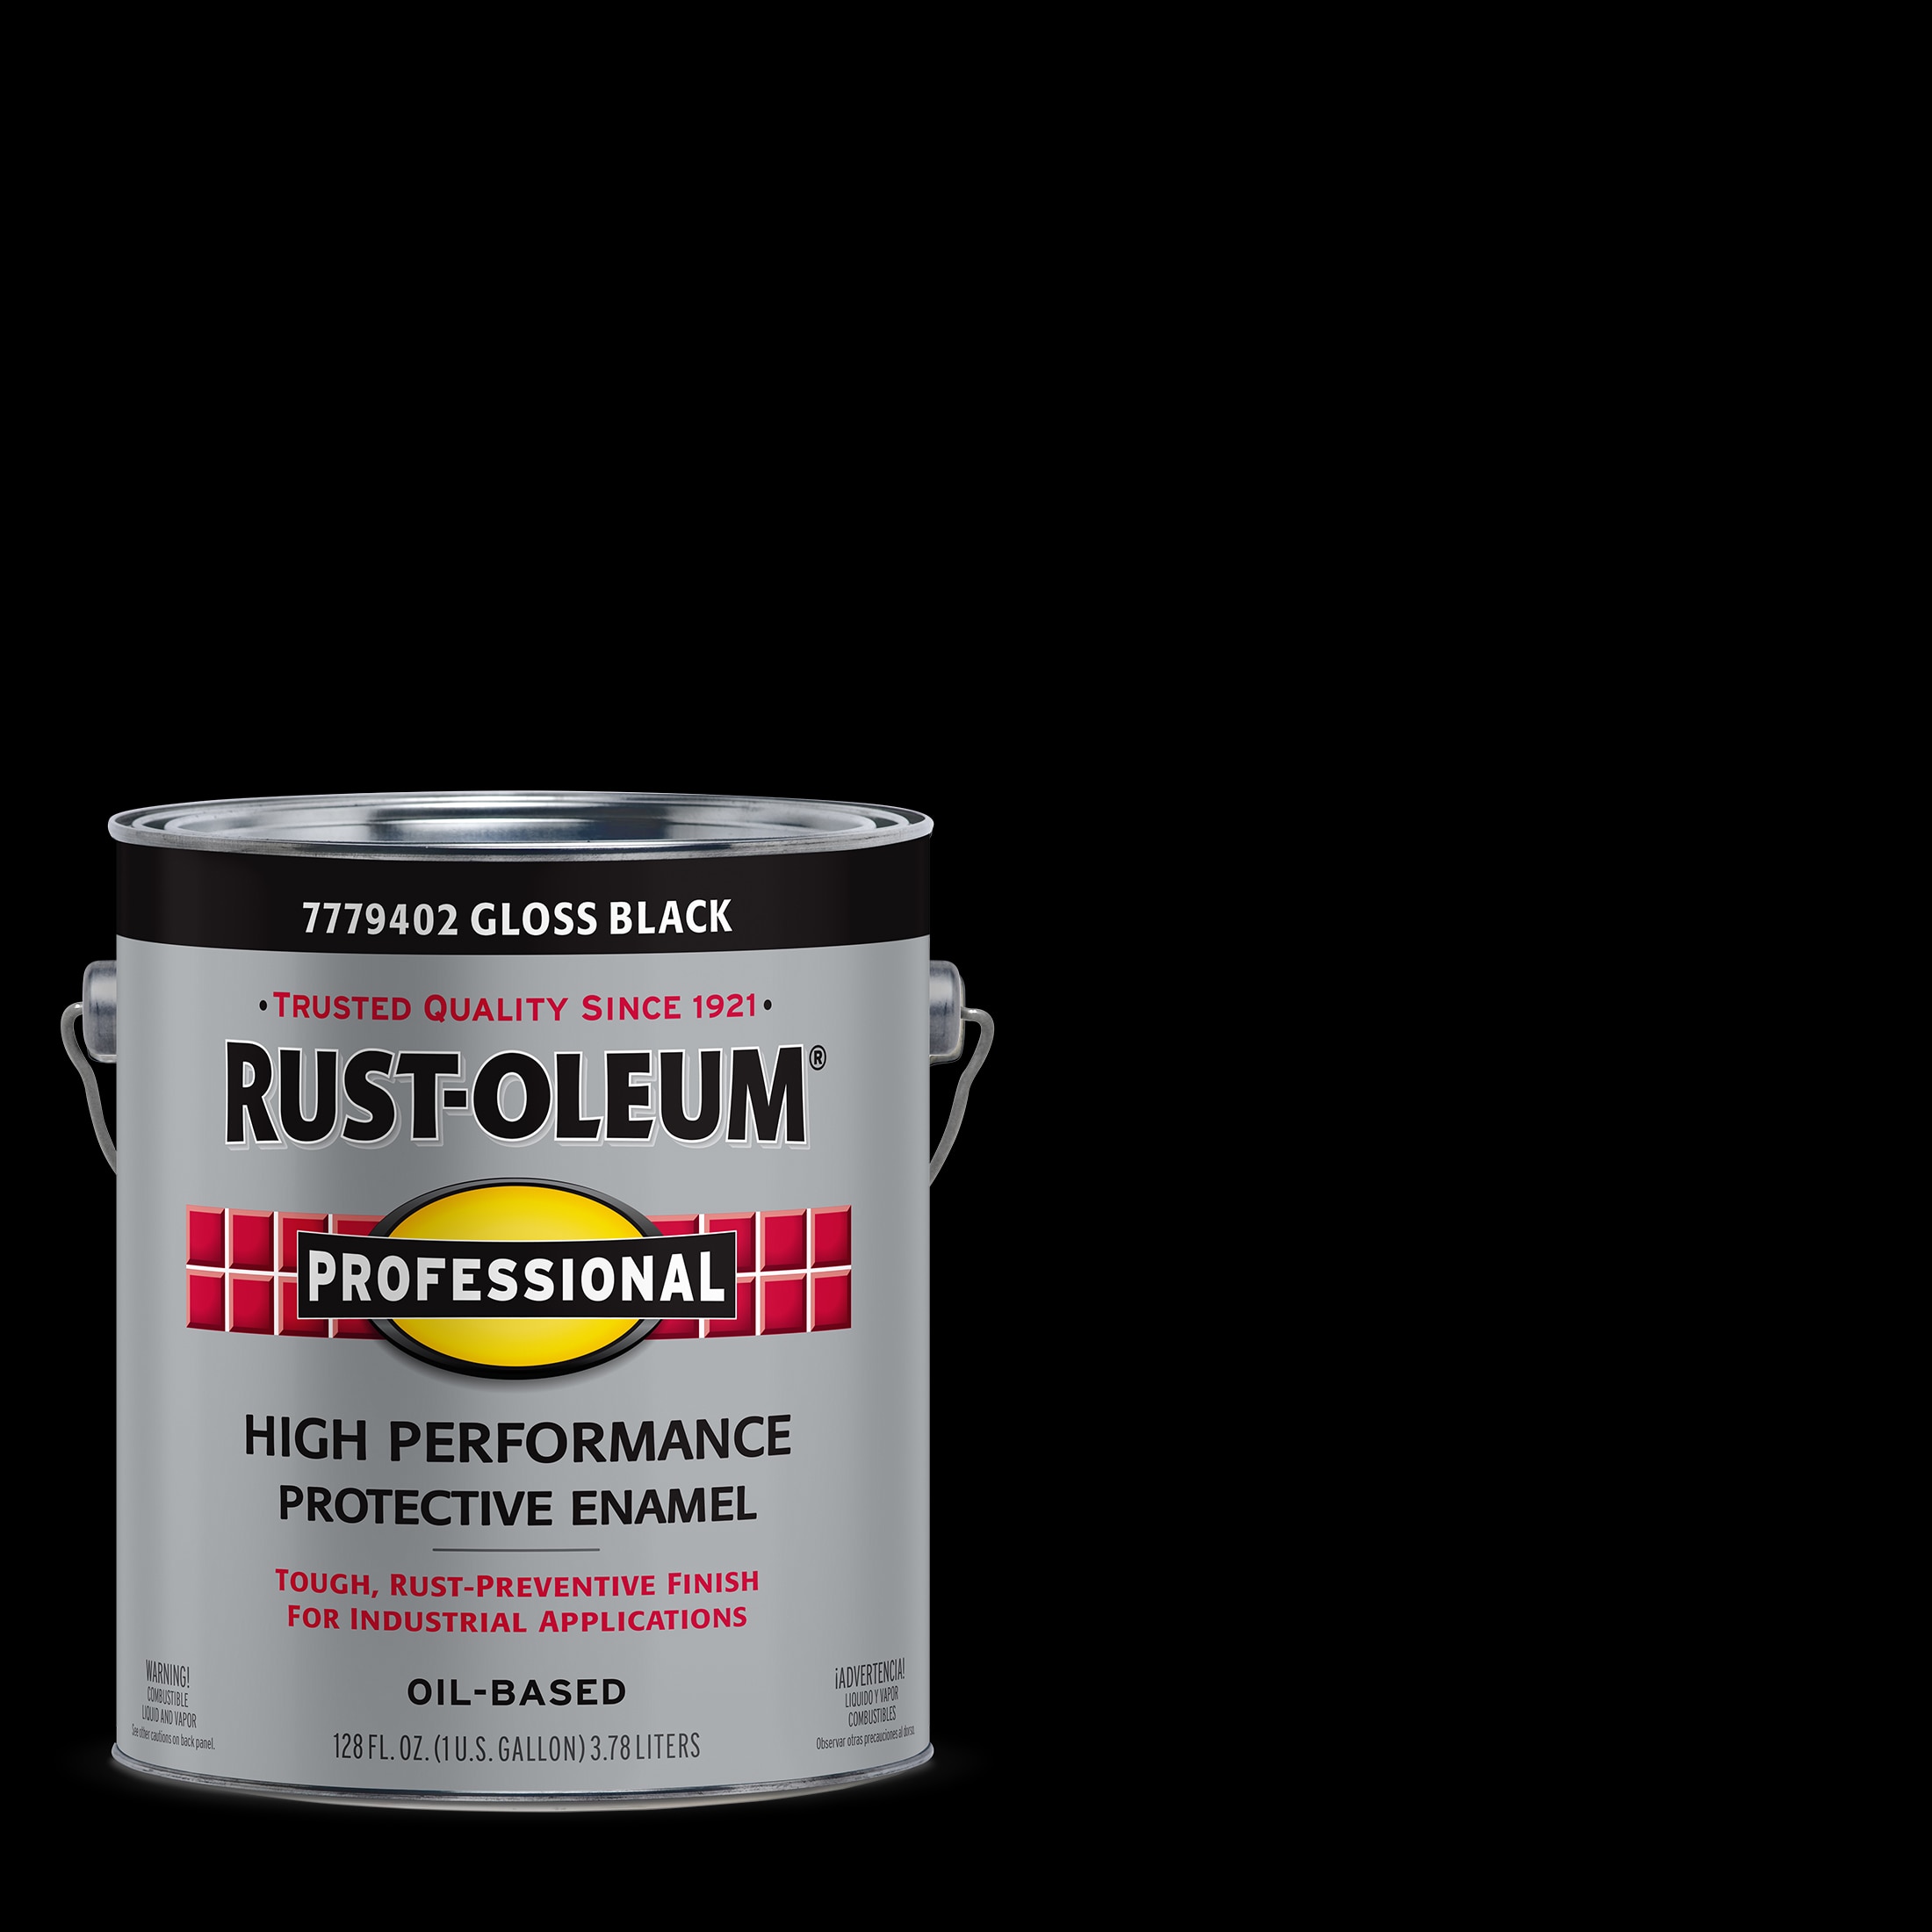 Rust-Oleum 242255 Protective Enamel Paint 1 Gal Smoke Gray